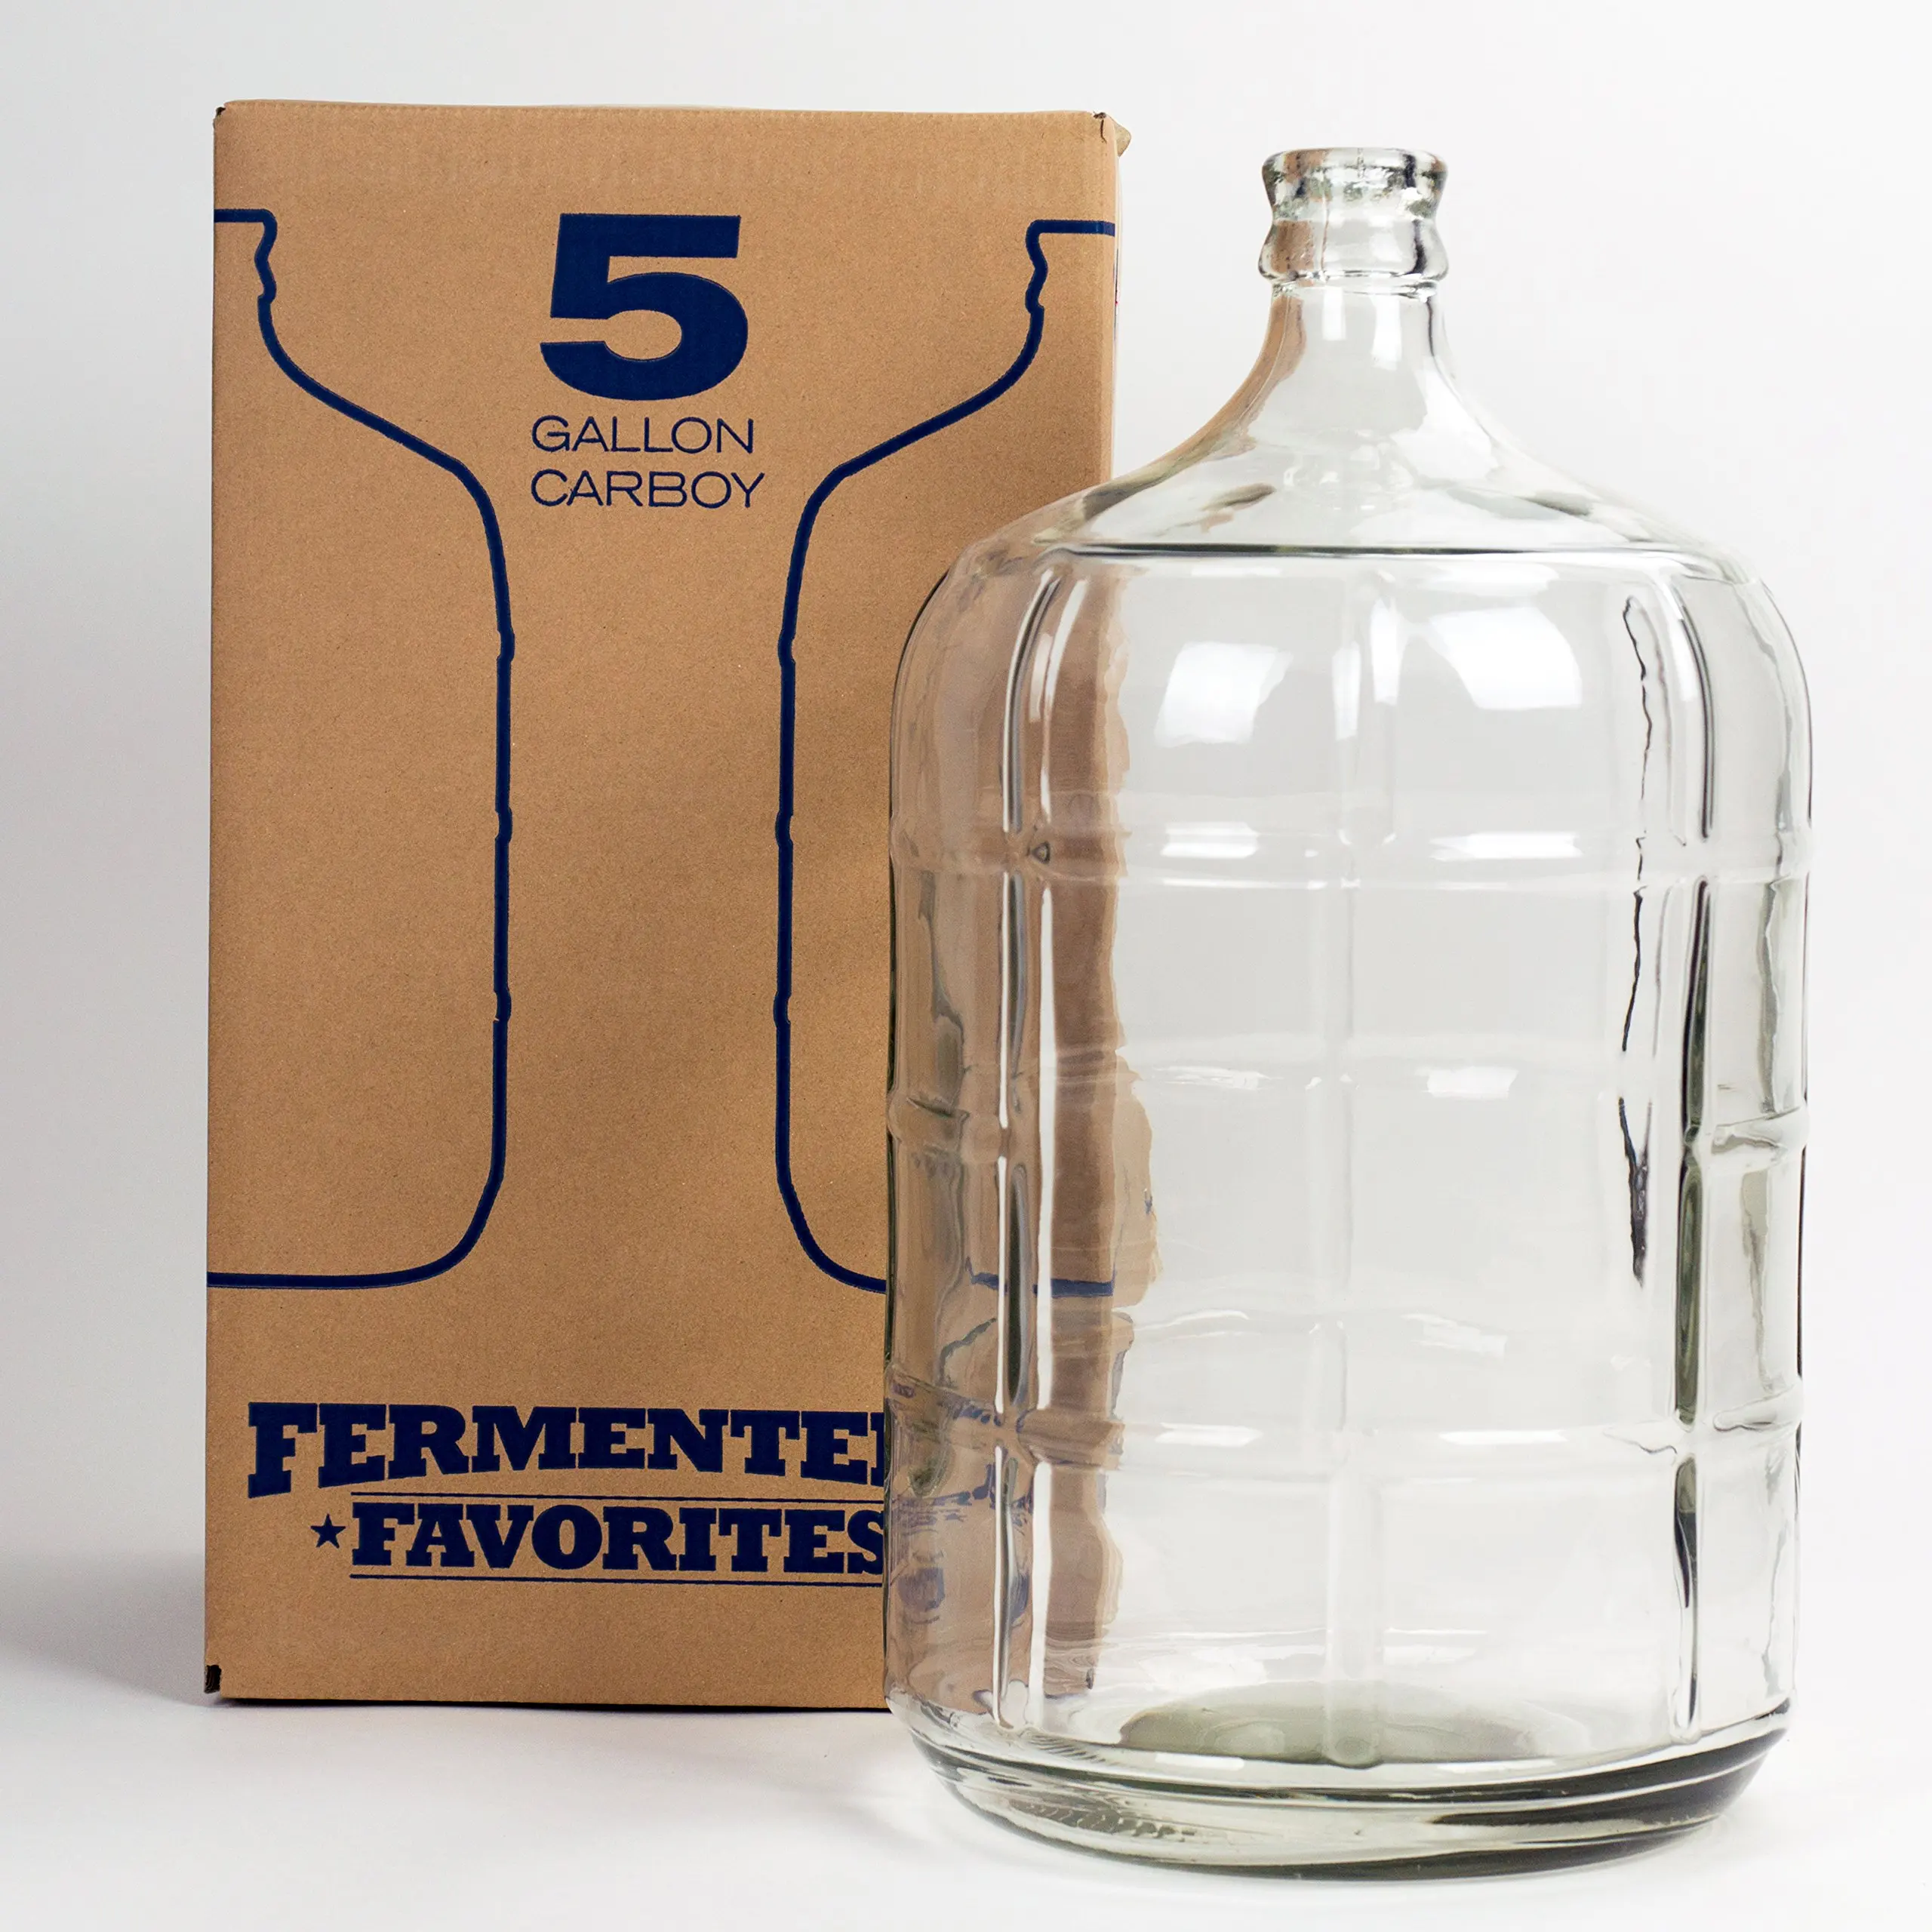 39.99. Fermenter's Favorites 5 Gallon Glass Carboy Fermenter for Home ...